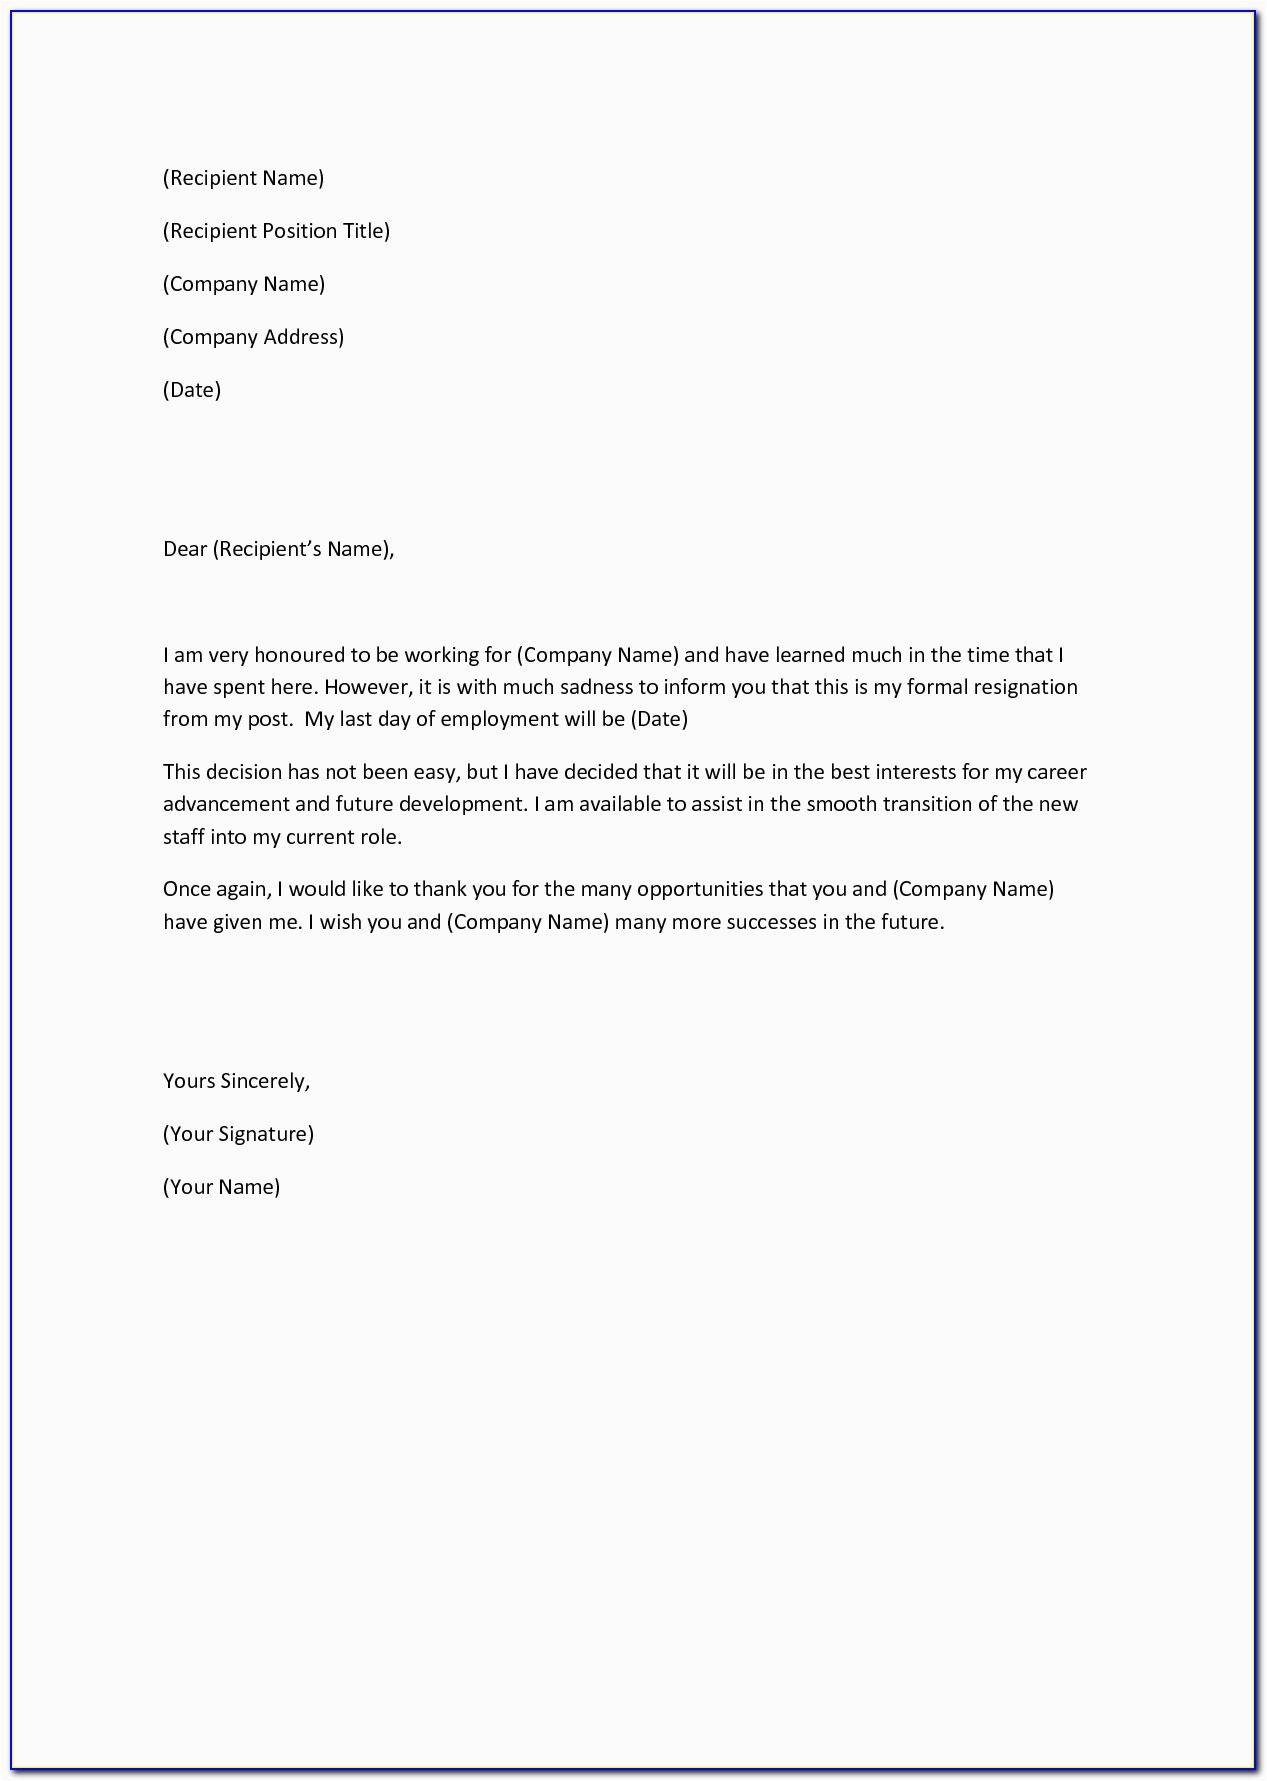 Sample Cna Resignation Lettergreat Sample Resume Nursing Cna Resignation Letter Letter Resume Examples K75pmavkol